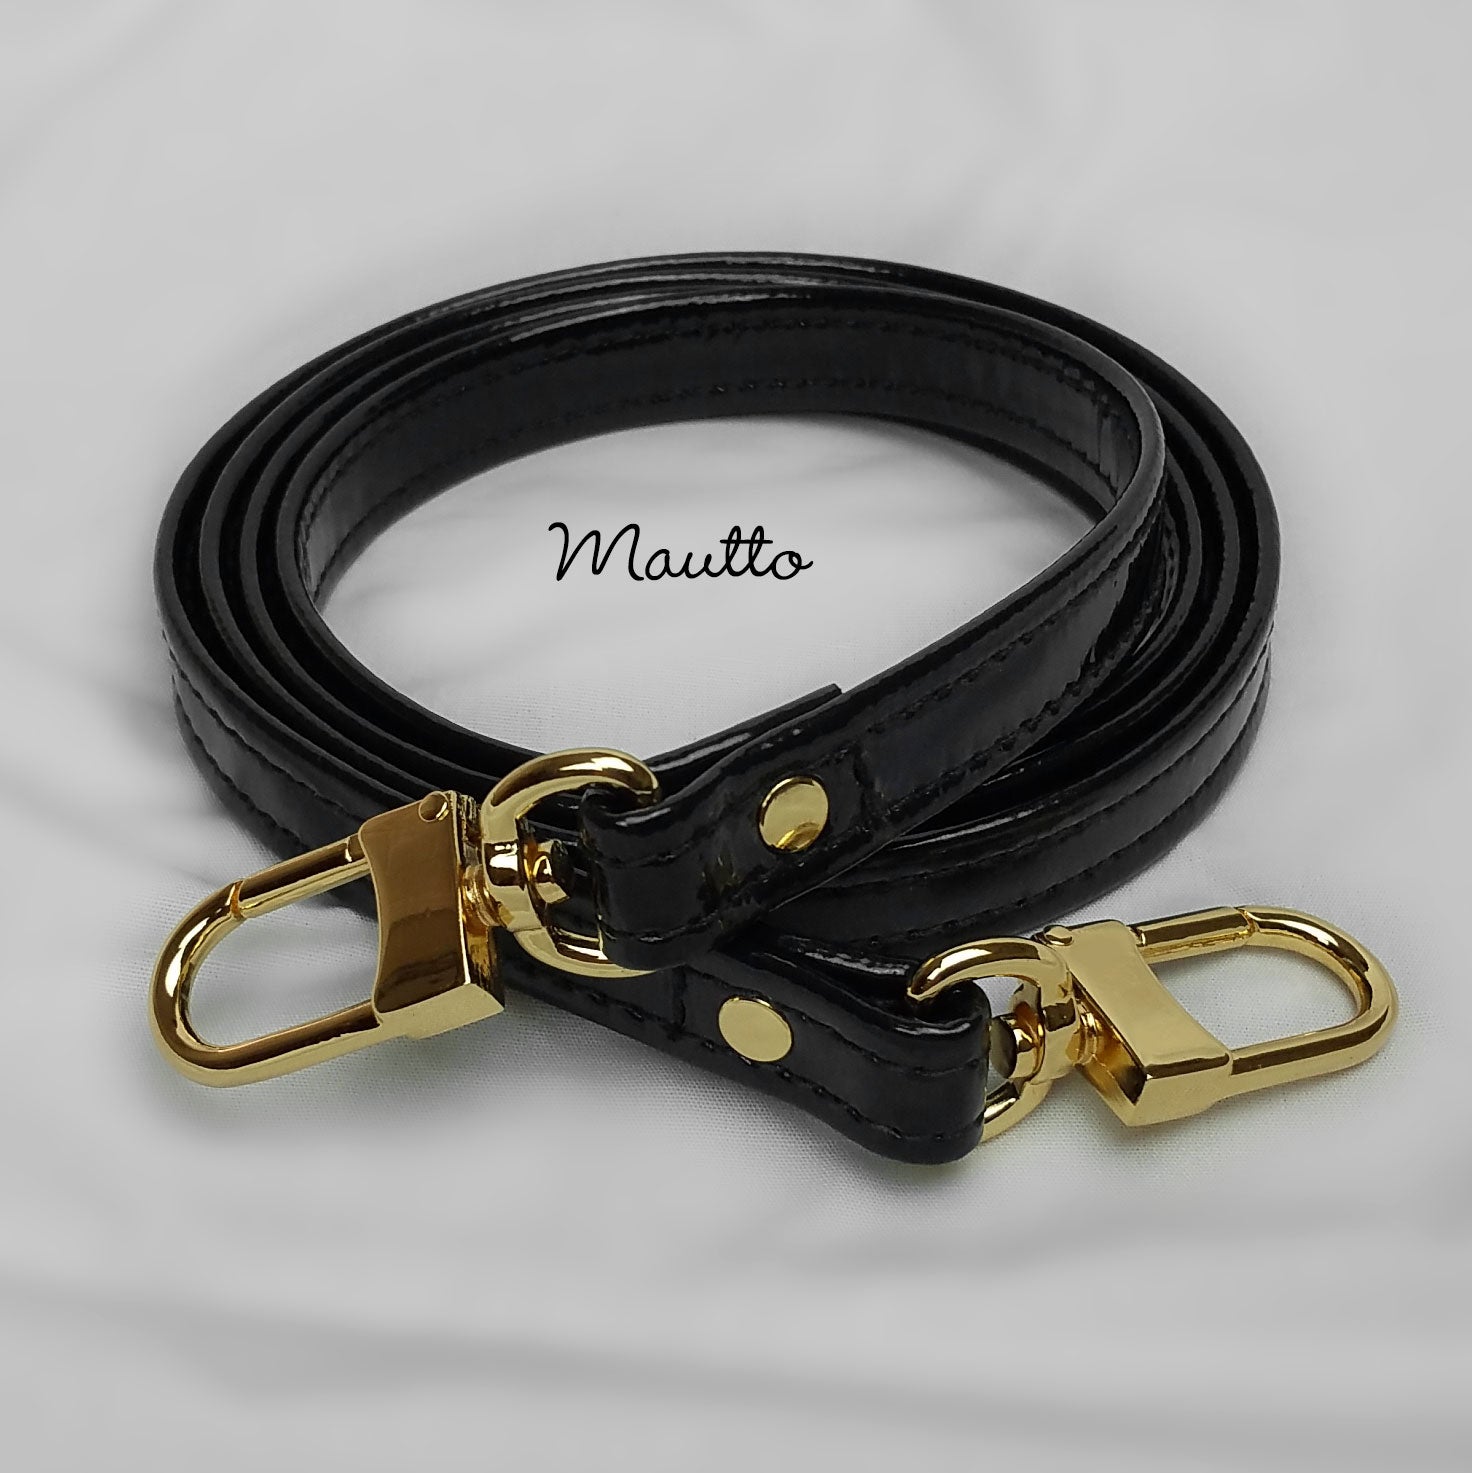 Mautto Black Leather Strap (13mm Petite Width) for LV Pochette, Alma, Eva Etc 60 Extra Long Crossbody / Silver-Tone